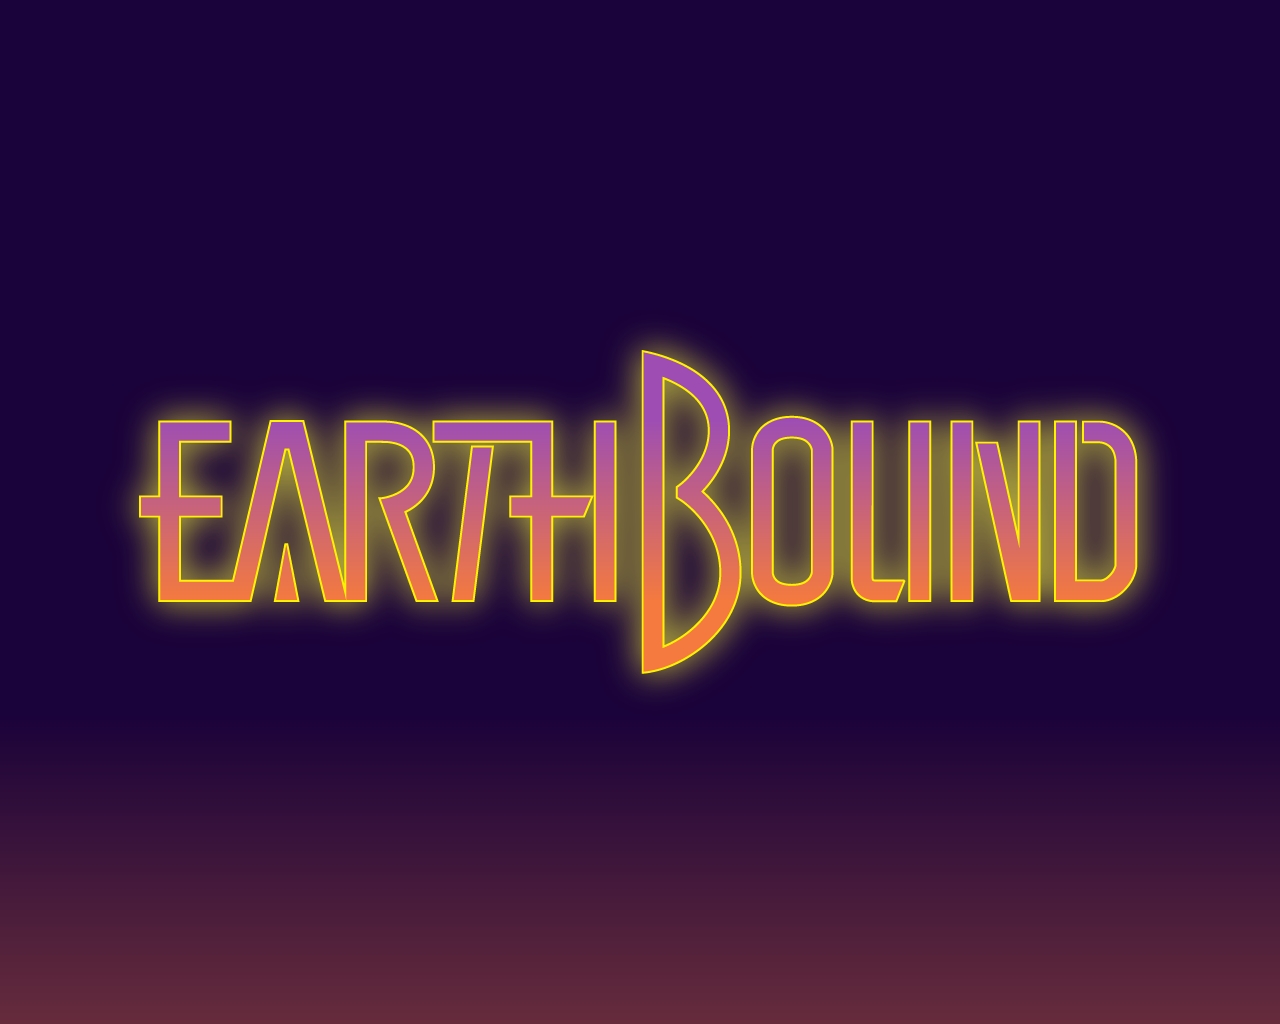 Earthbound, SNES, Game logo Wallpaper